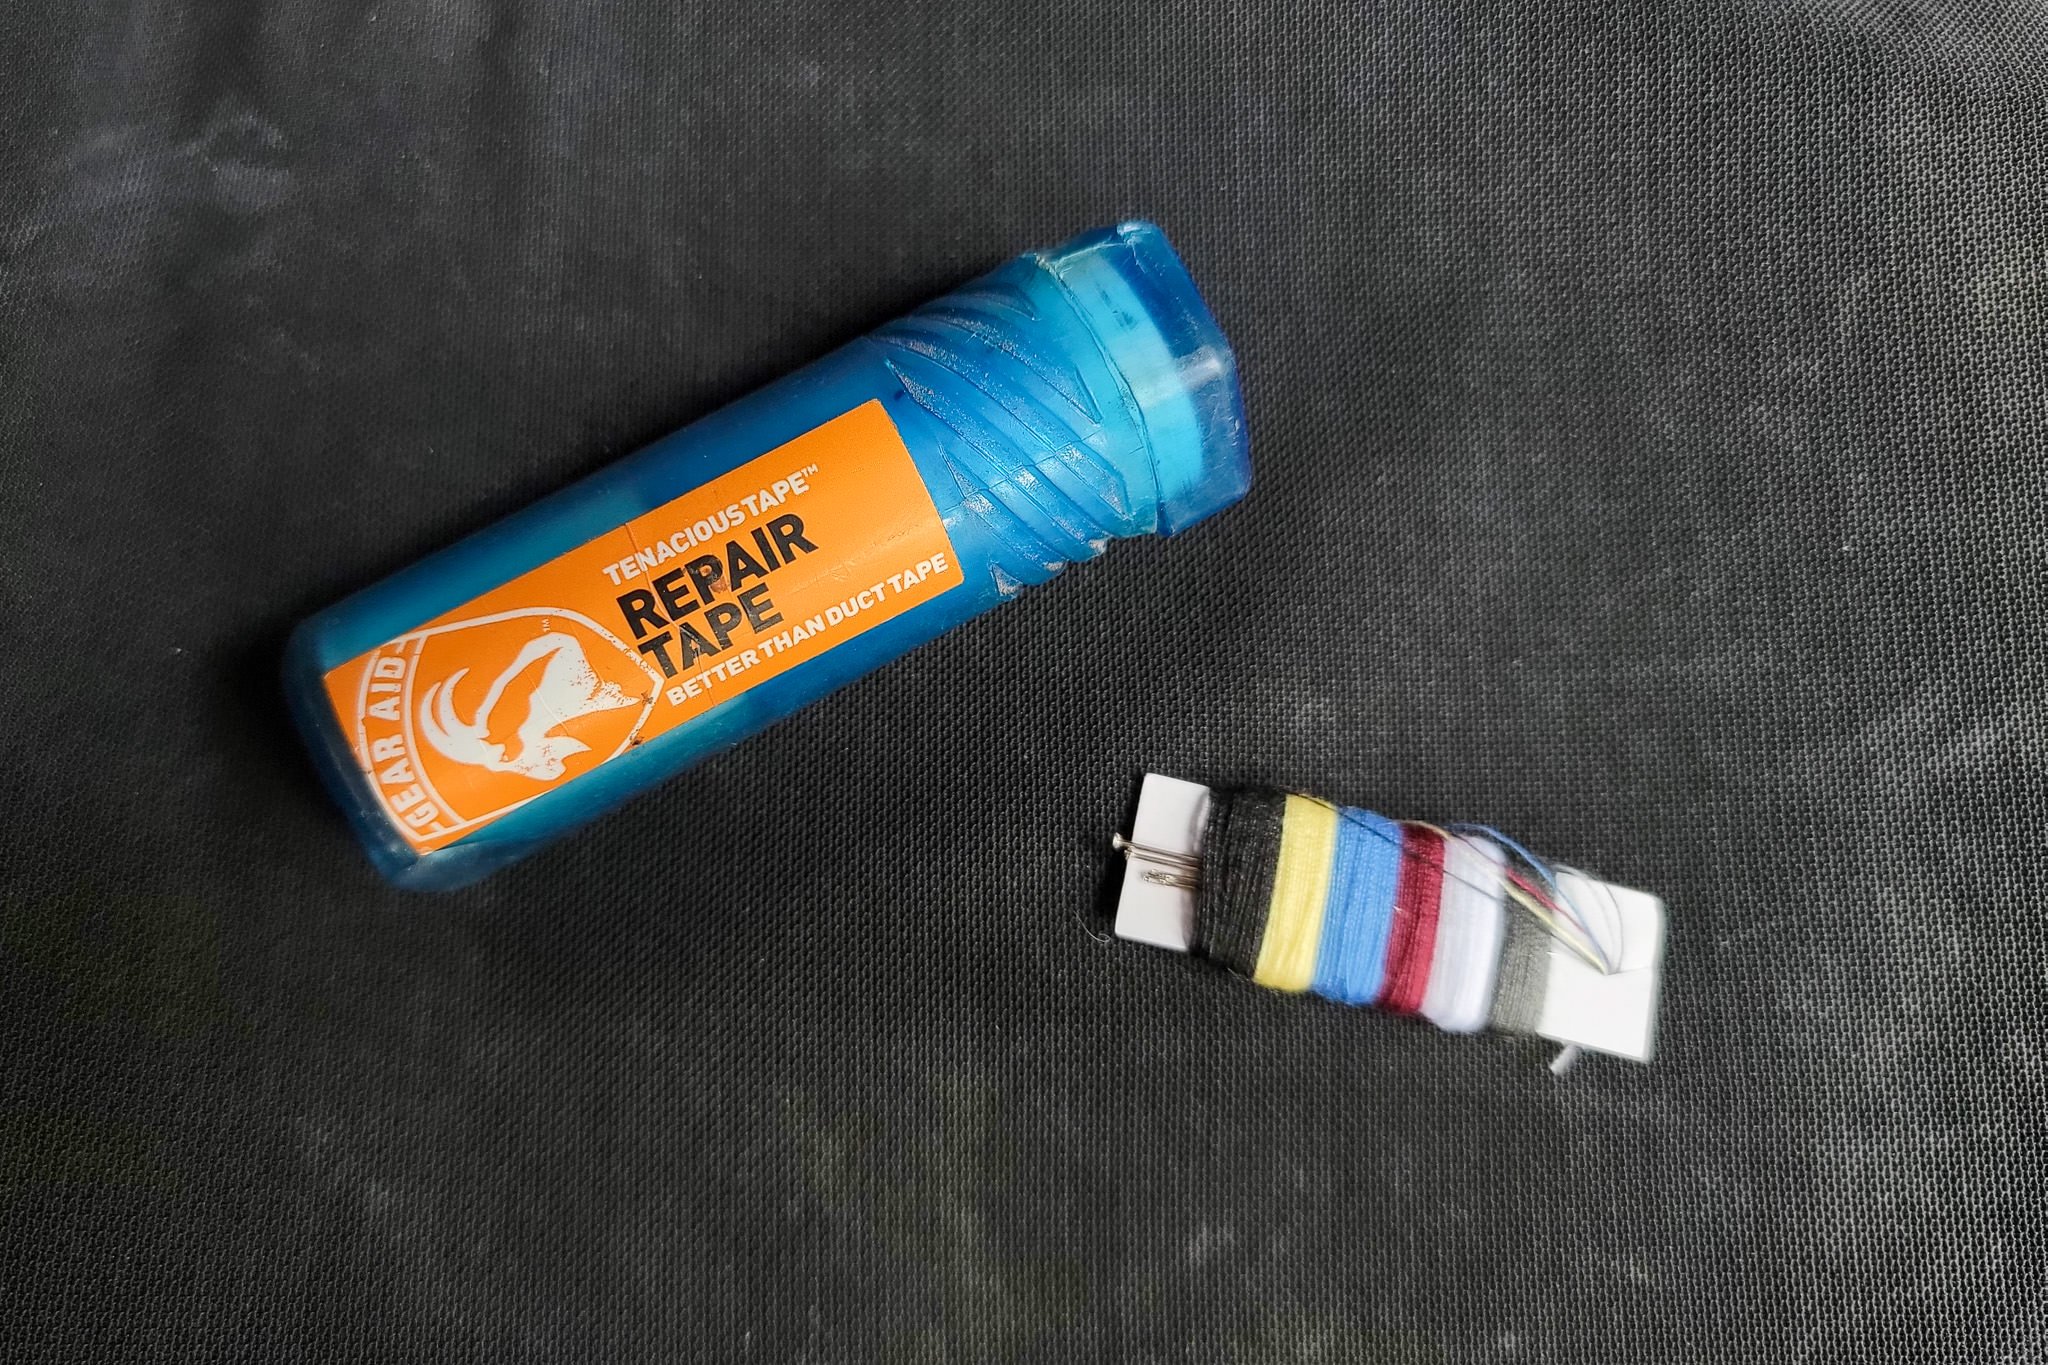 Closeup of Tenacious Tape & a small Sewing kit for tent repairs